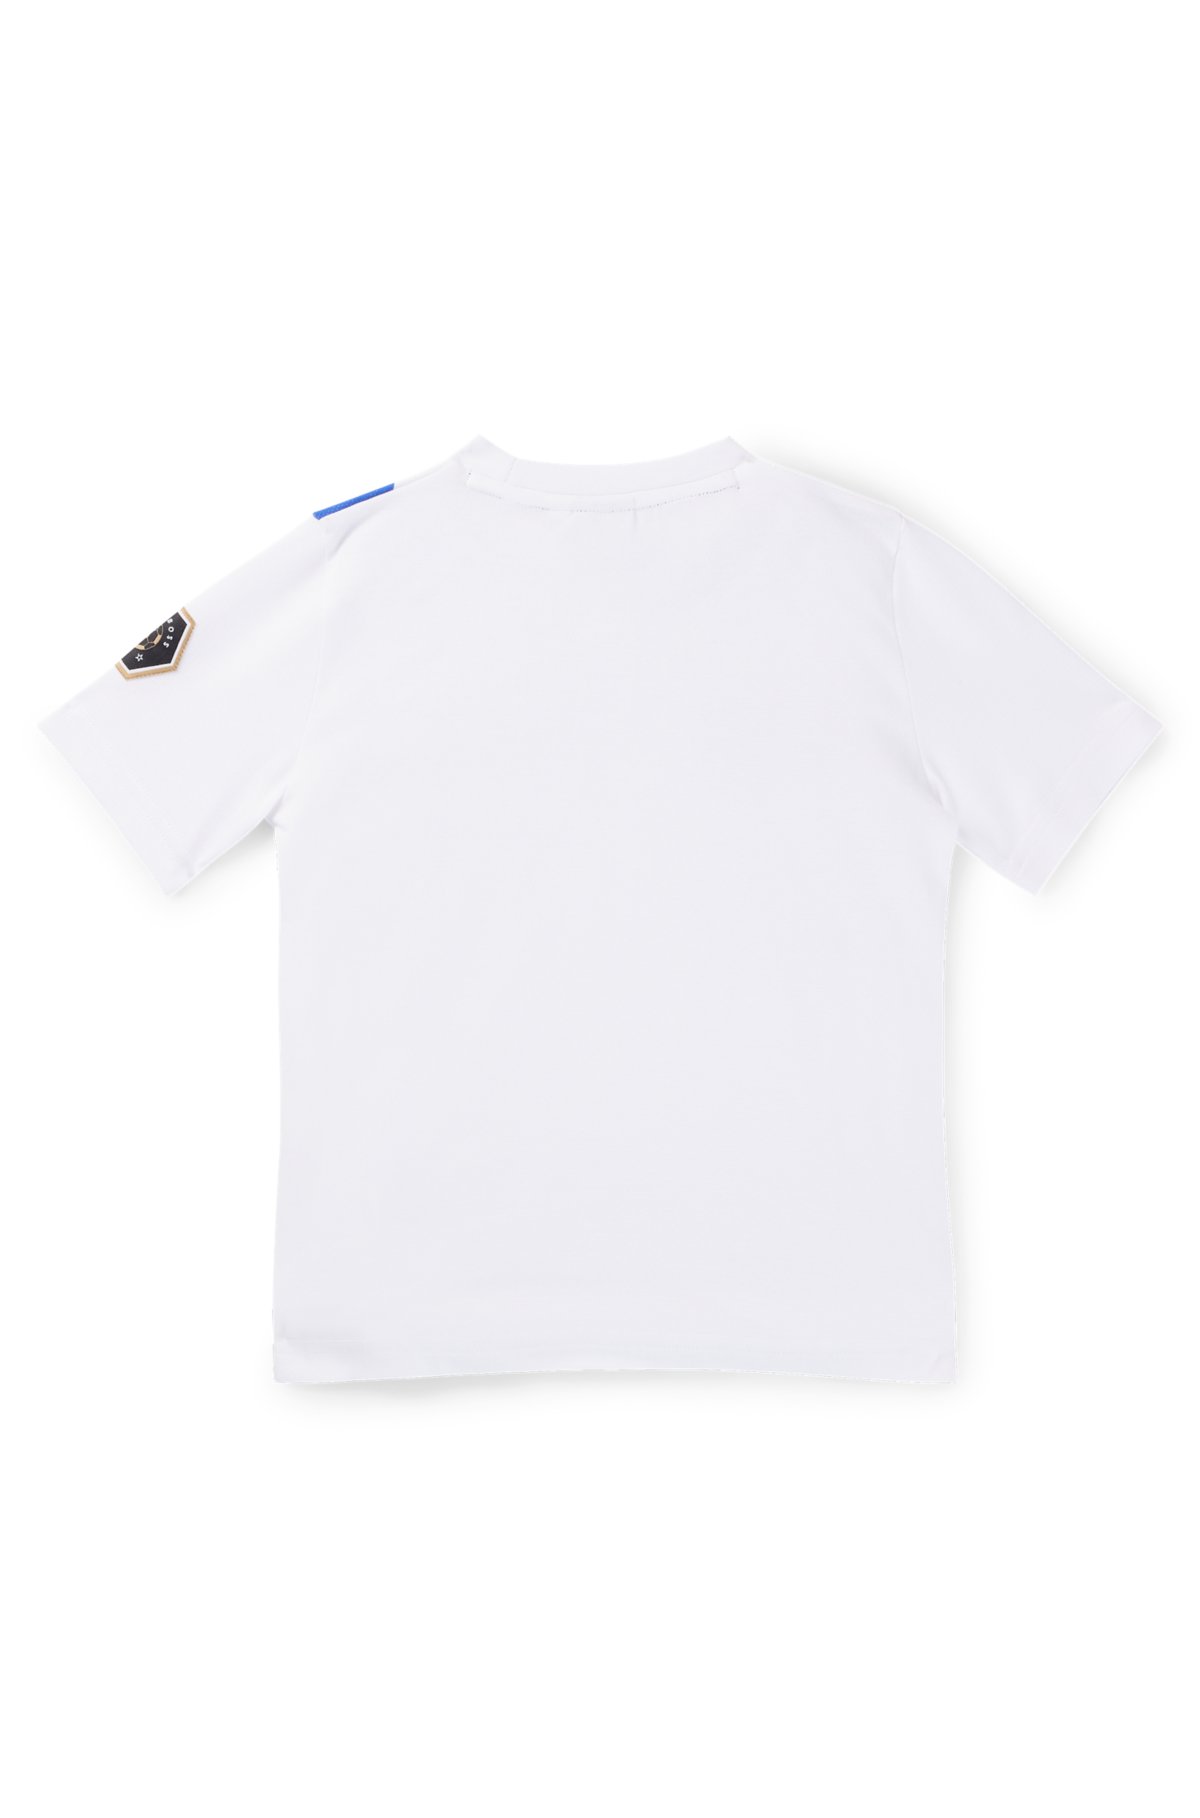 Kids' T-shirt with degradé artwork and logo details, White